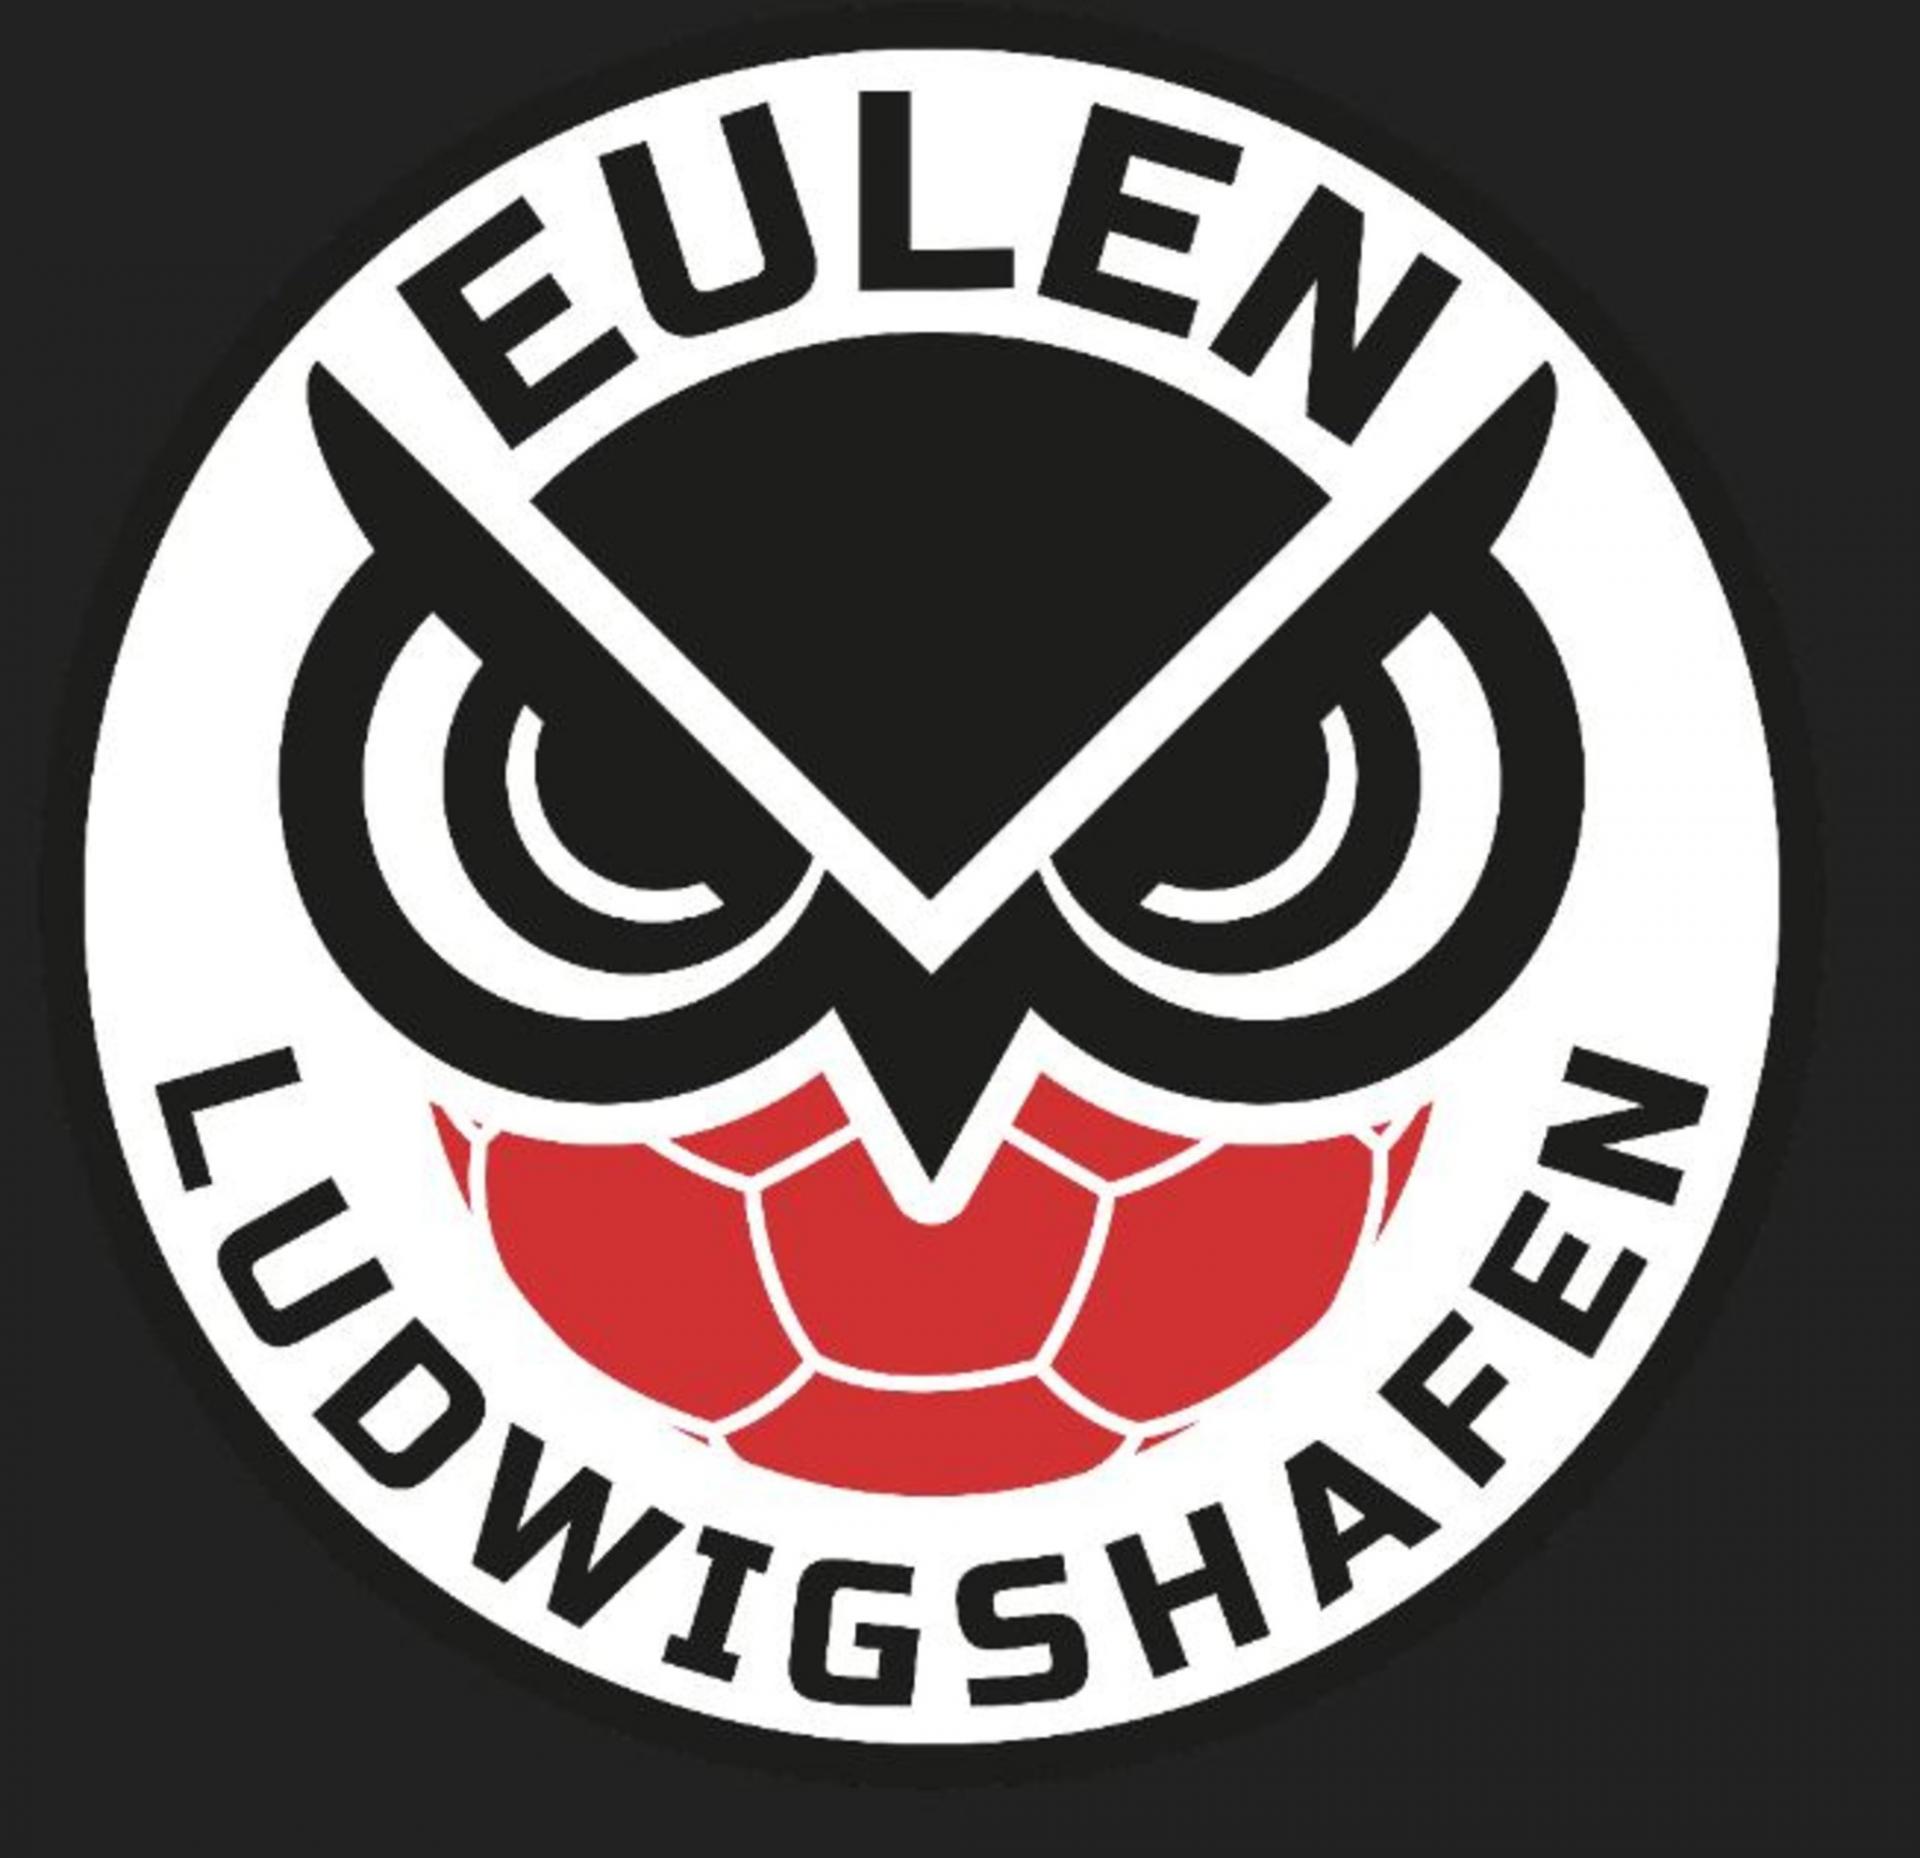 Eulen Ludwigshafen